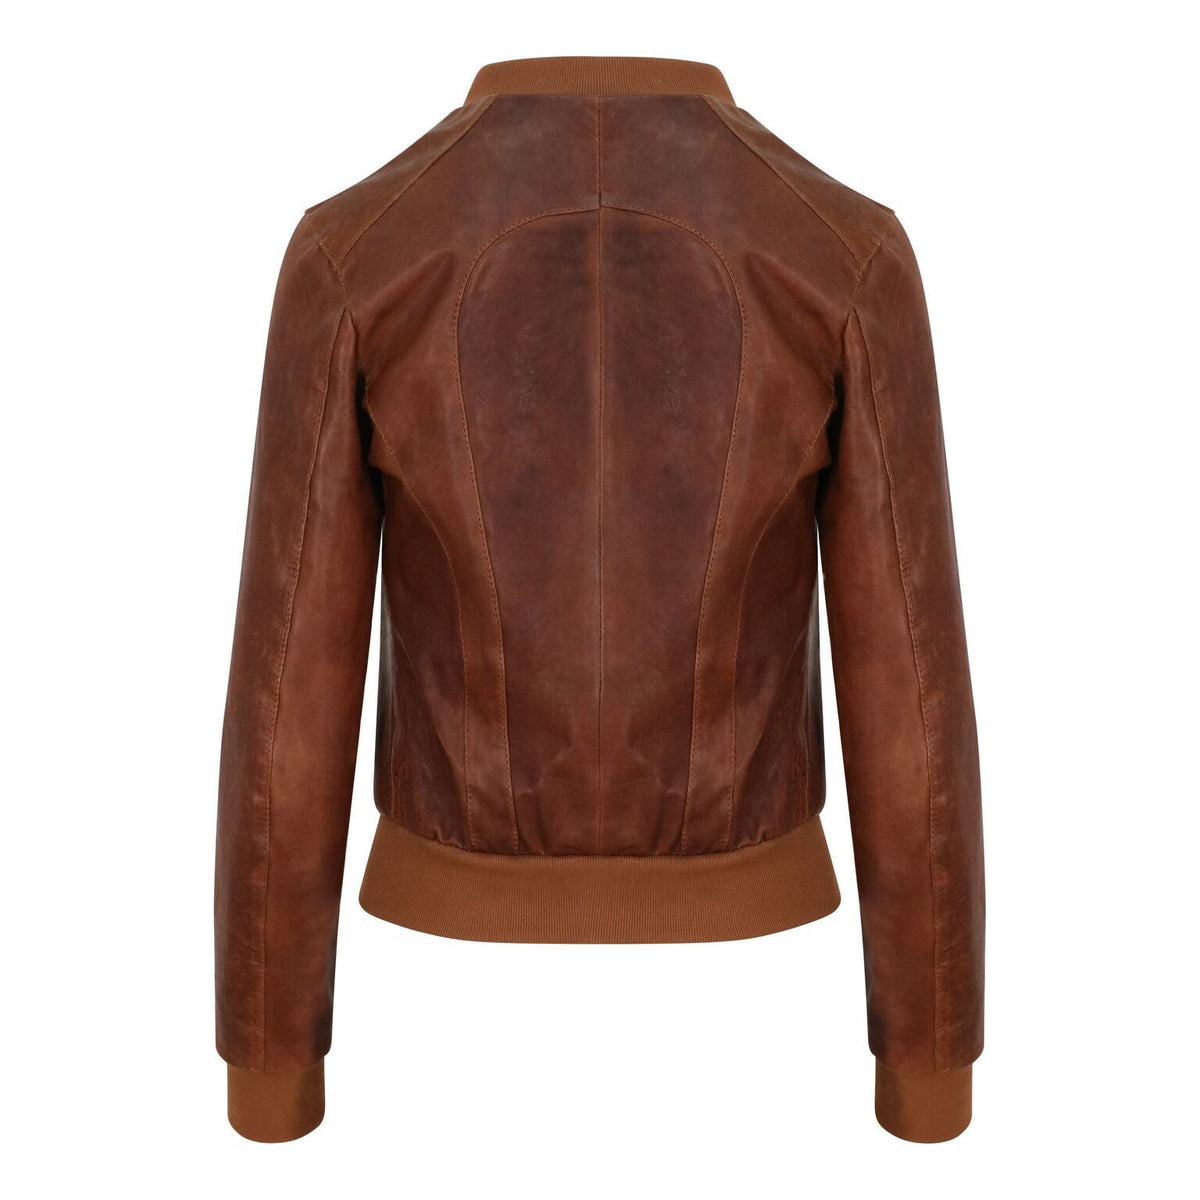 Yan Neo London Mia Tan Vintage Leather Bomber Jacket - Yan Neo London